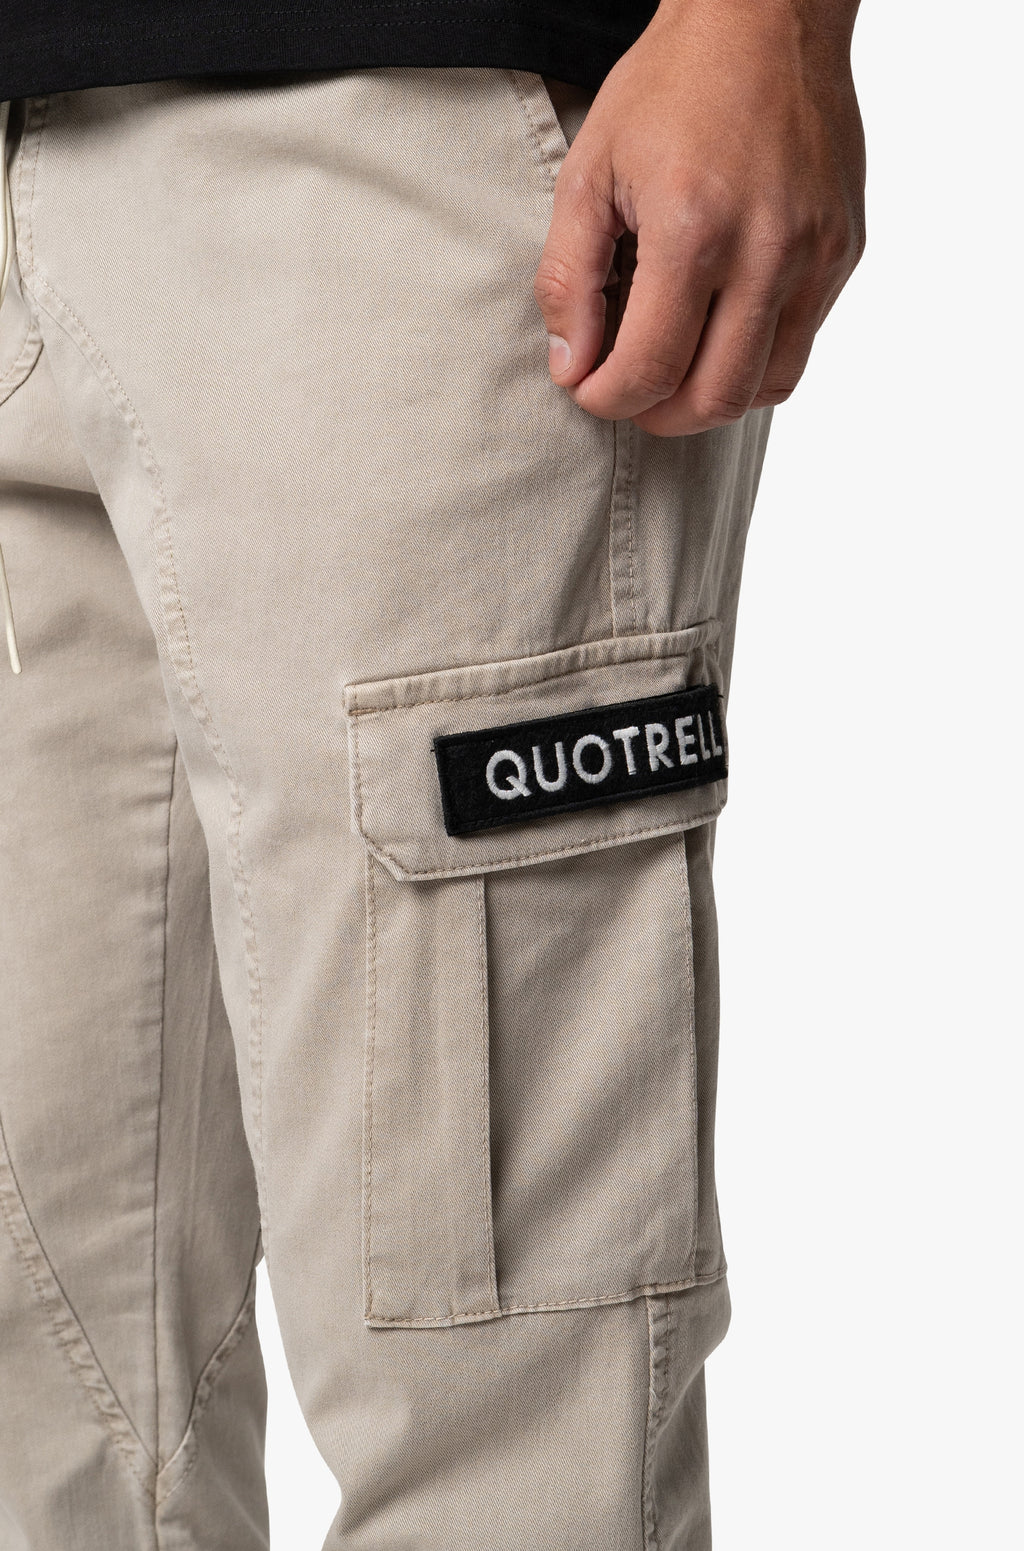 Quotrell Brockton Cargo Pants